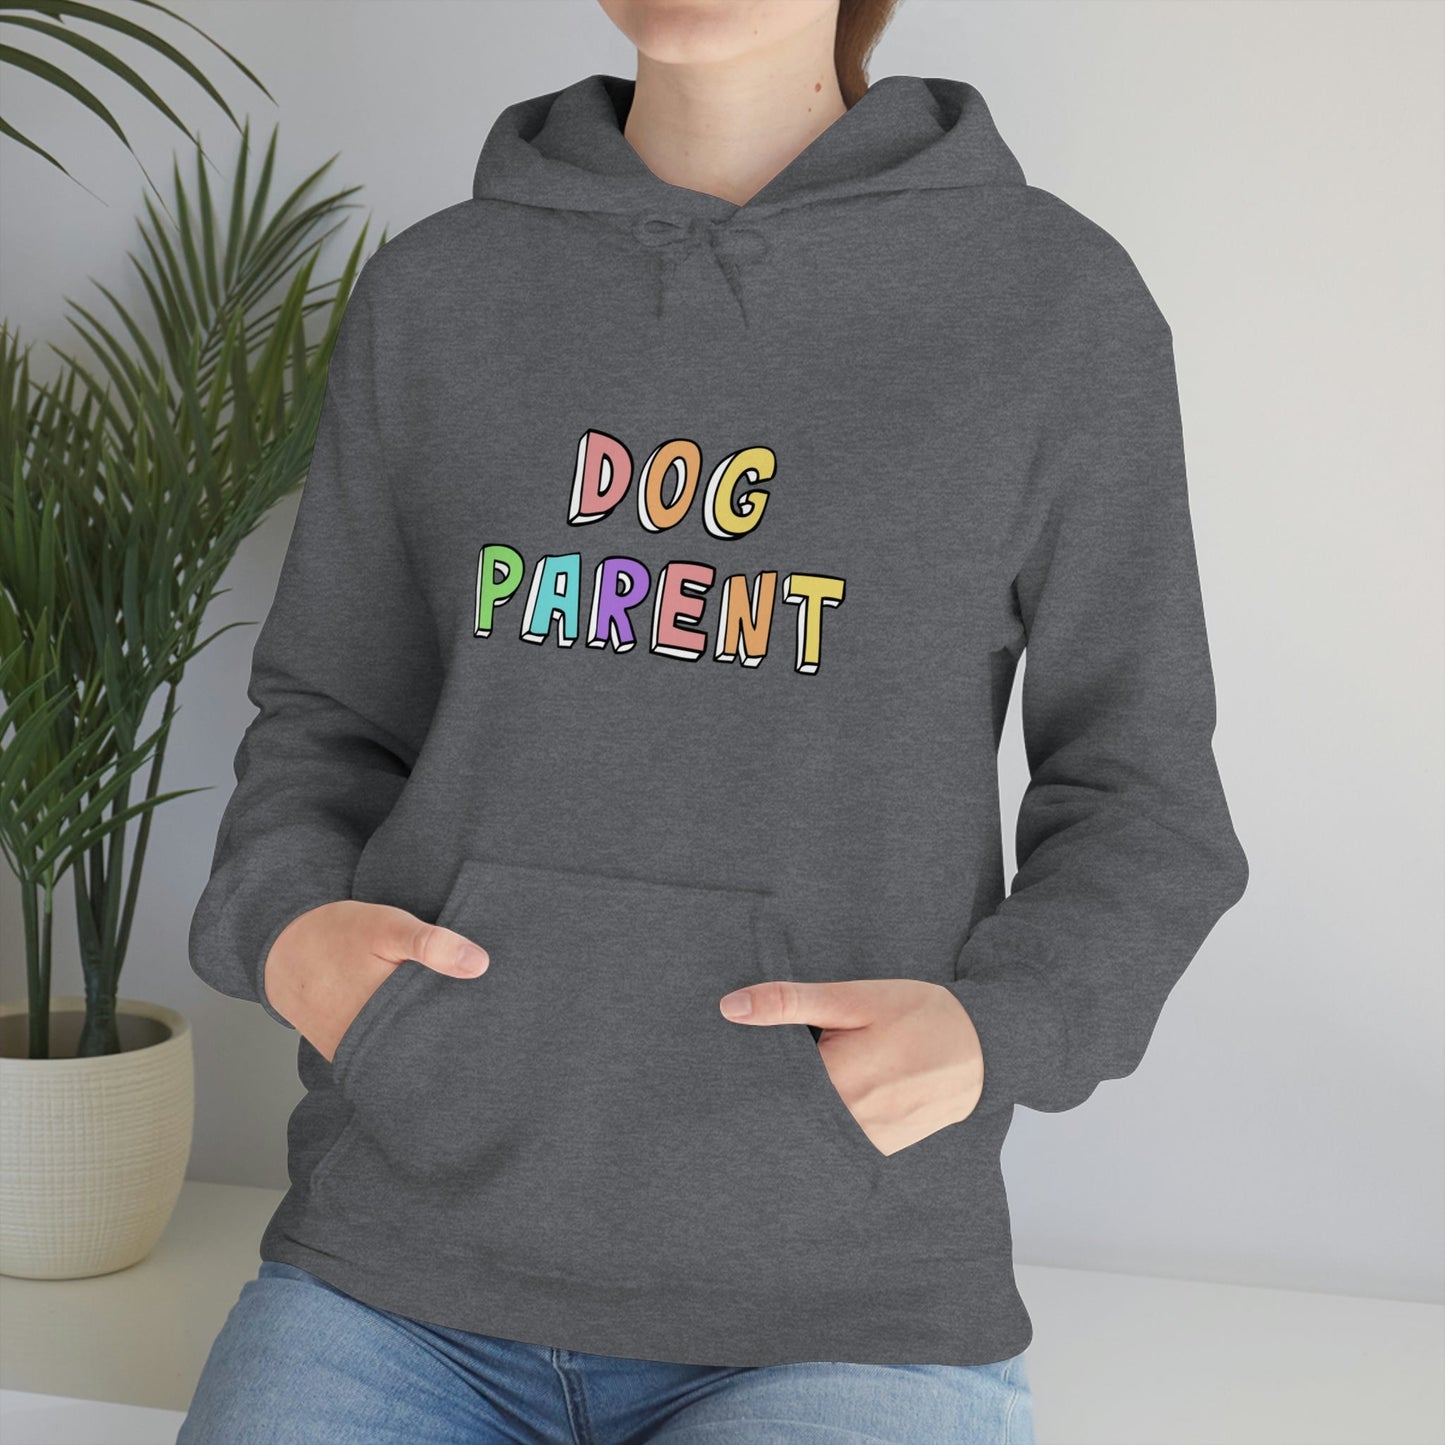 Dog Parent | Hooded Sweatshirt - Detezi Designs-23224254245247072217